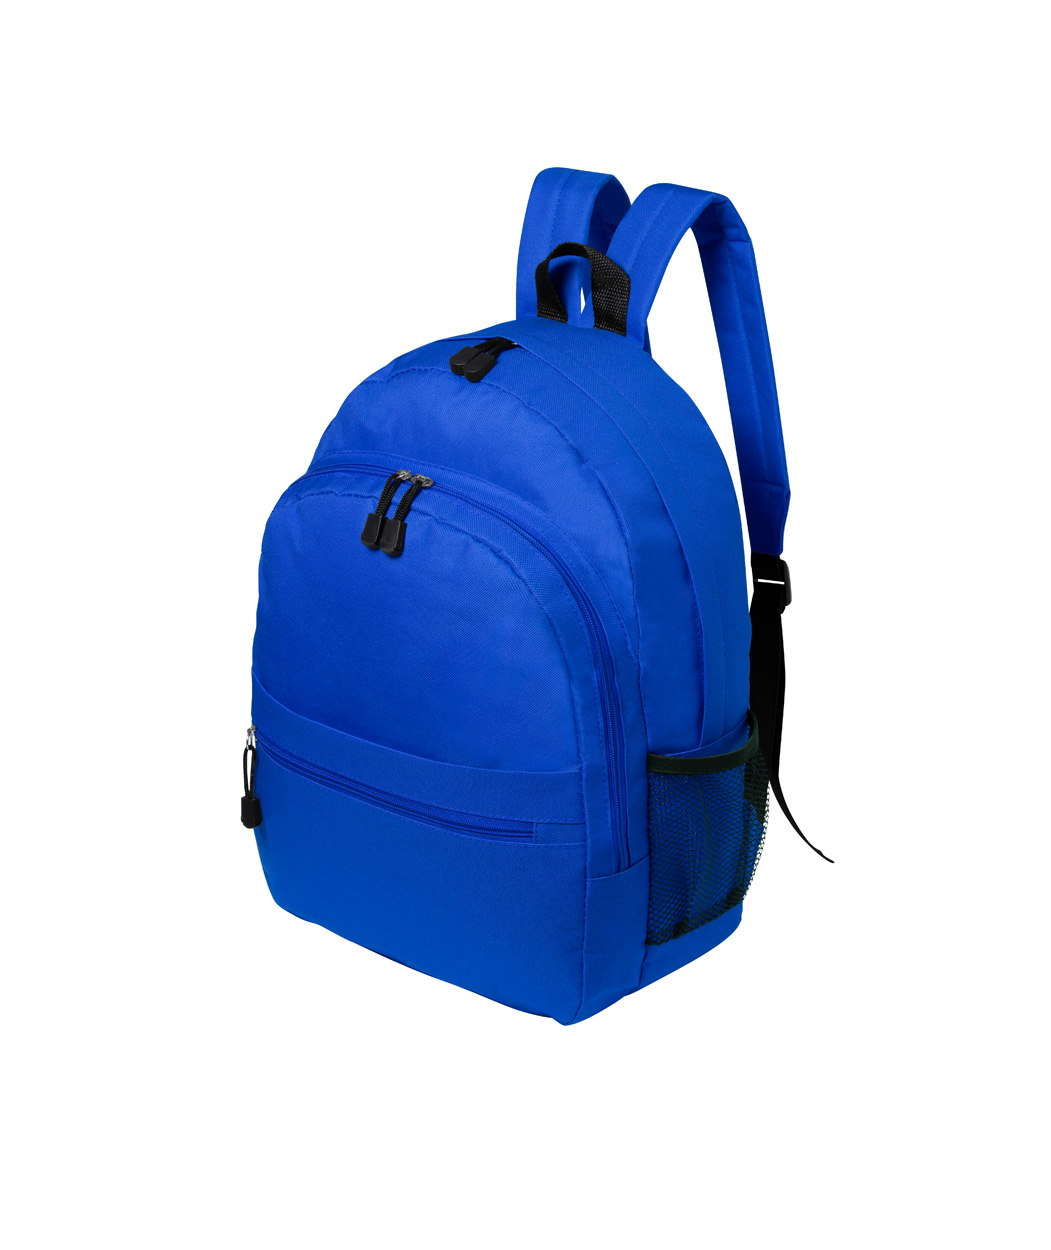 Ventix backpack - blue